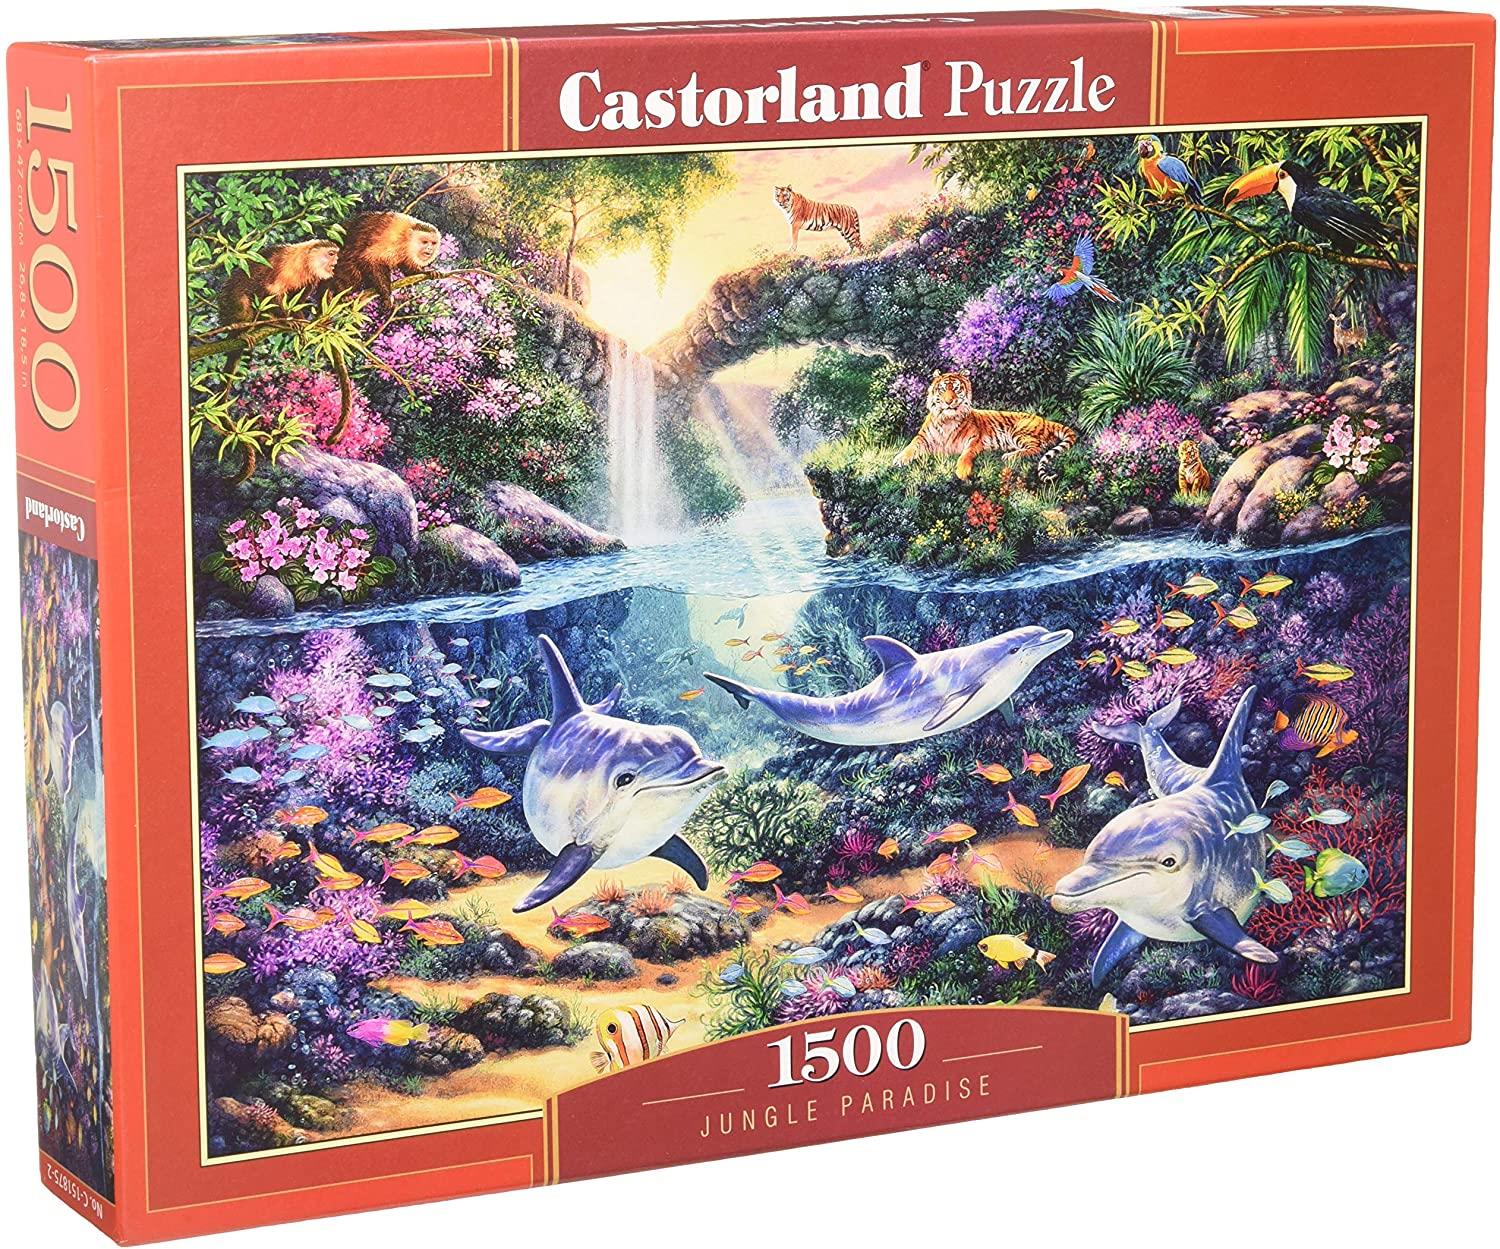 Castorland Jungle Paradise Jigsaw Puzzle (1500 Pieces)